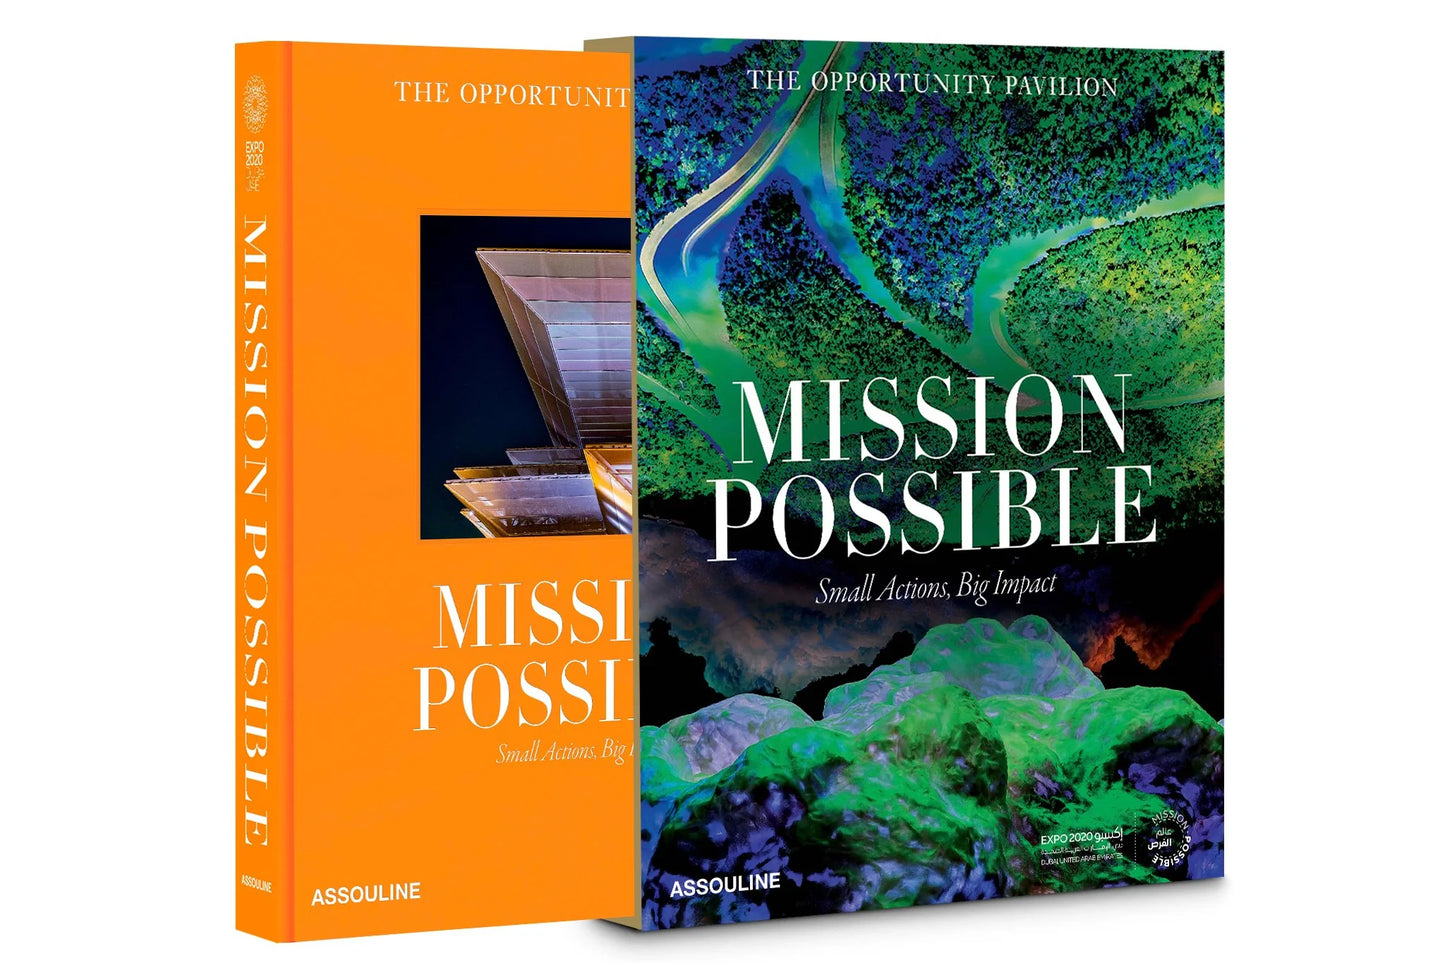 Book Expo 2020 Dubai: Mission Possible - The Opportunity Pavilion - Assouline